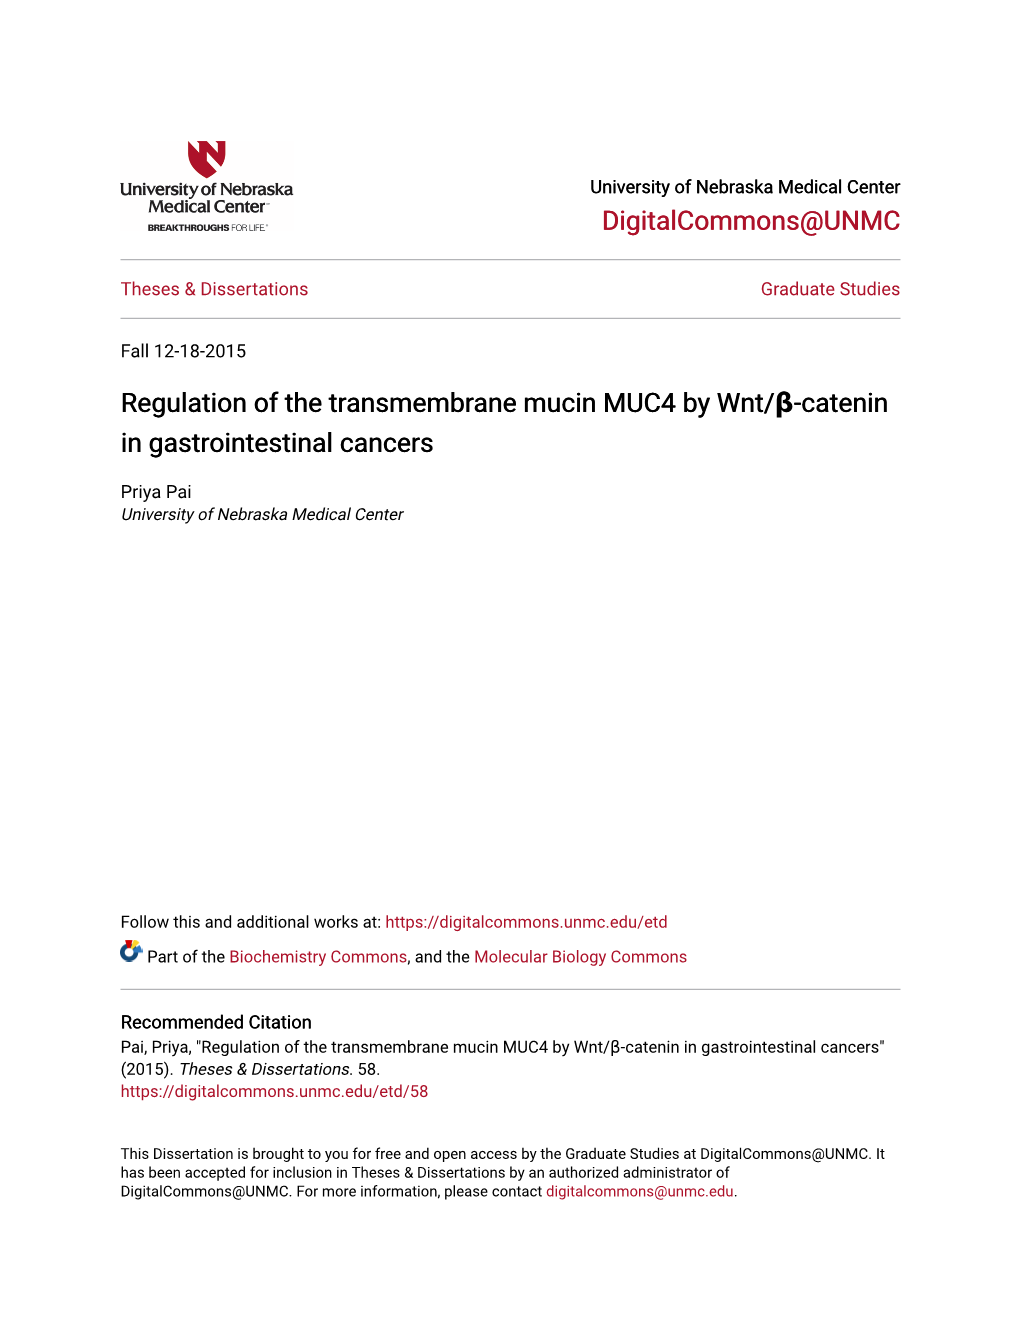 Digitalcommons@UNMC Regulation of the Transmembrane Mucin MUC4